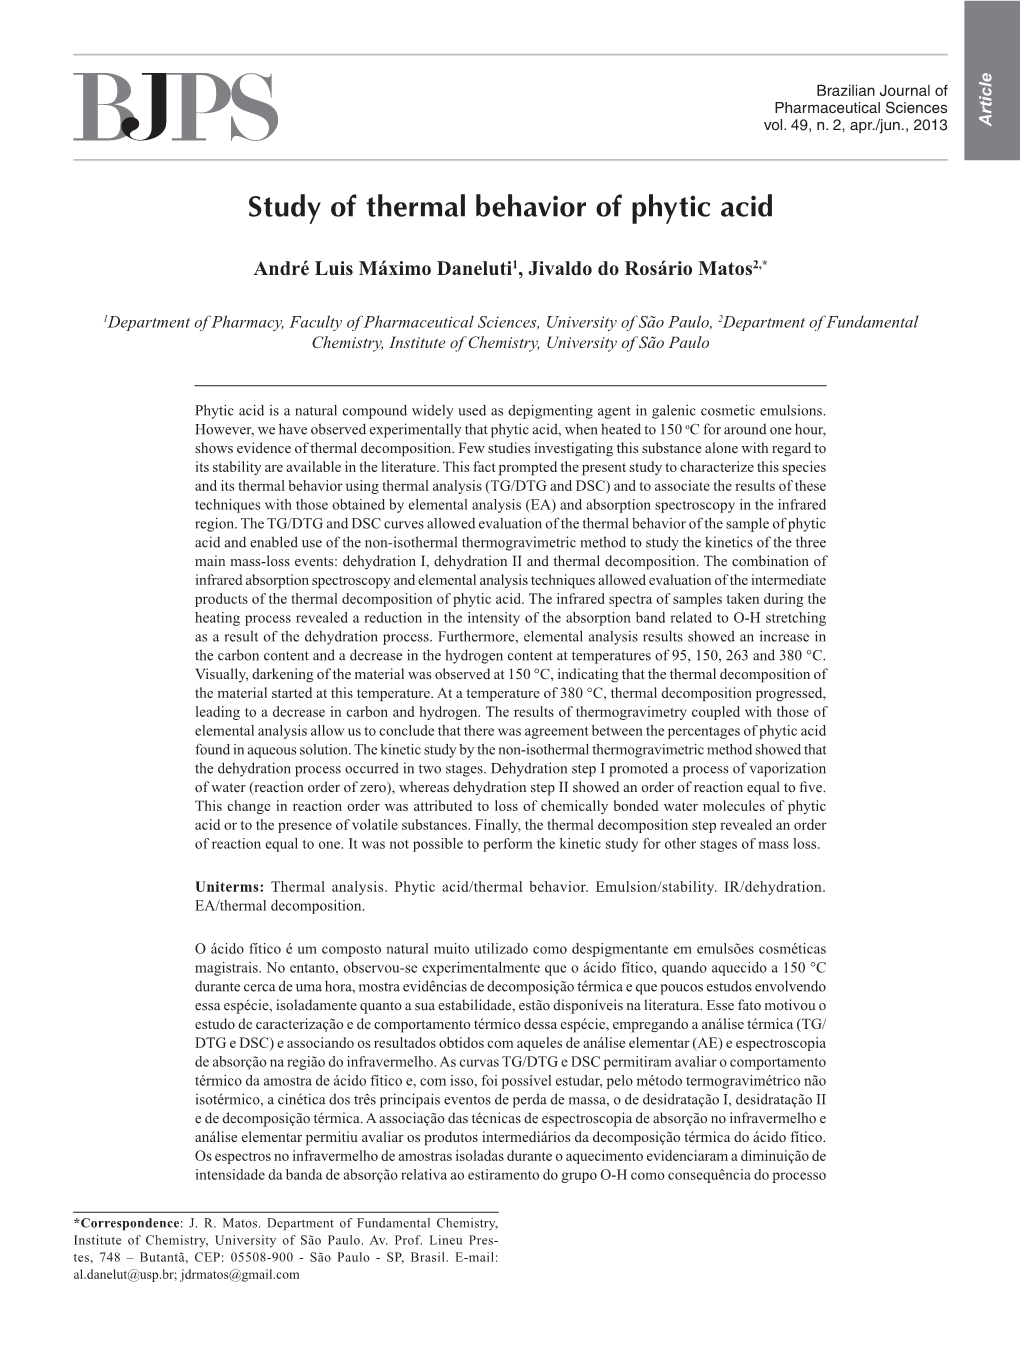 Study of Thermal Behavior of Phytic Acid